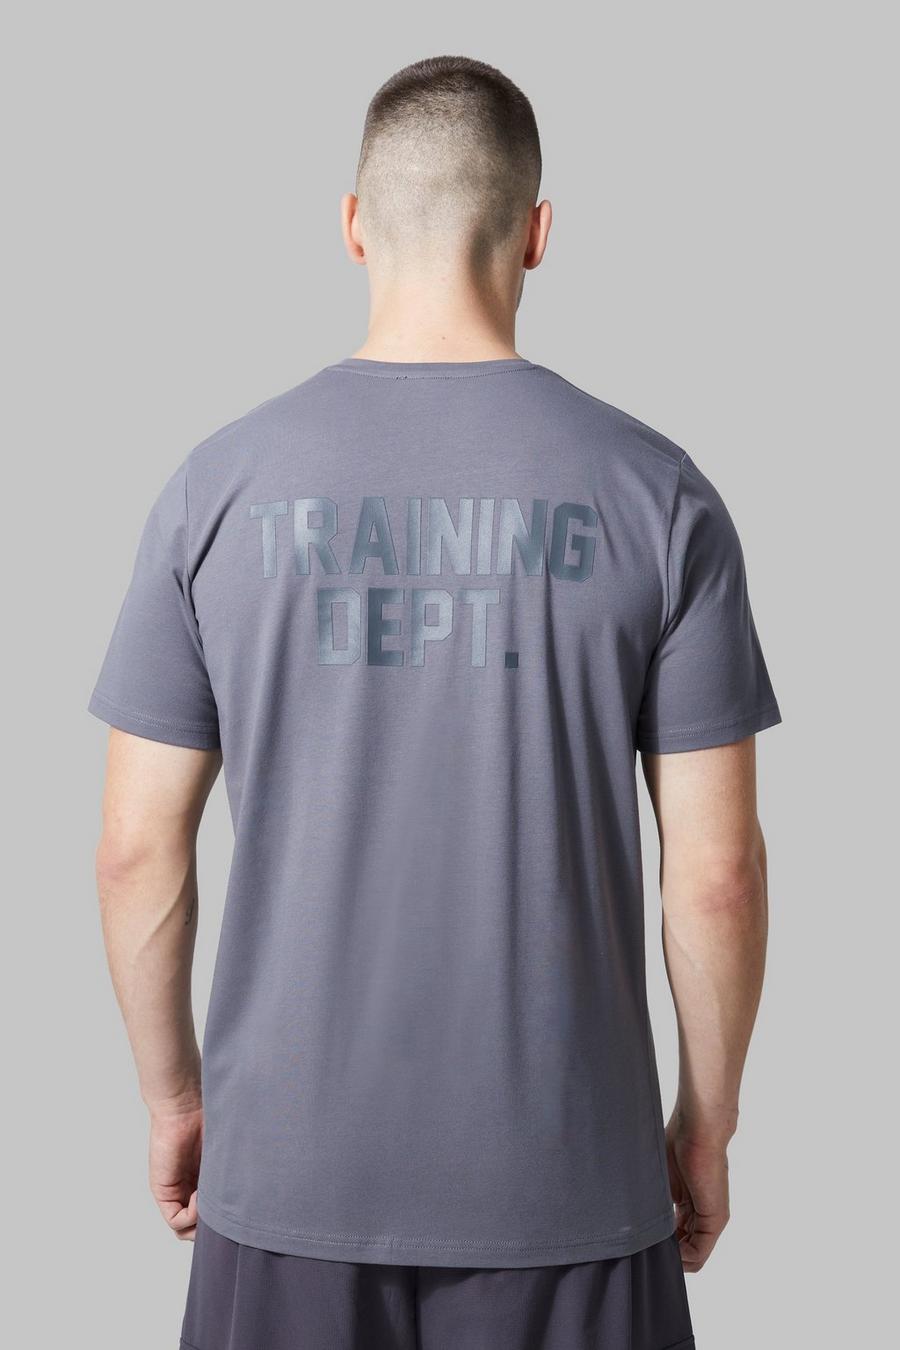 Camiseta Tall Active ajustada resistente con estampado Training Dept, Charcoal image number 1